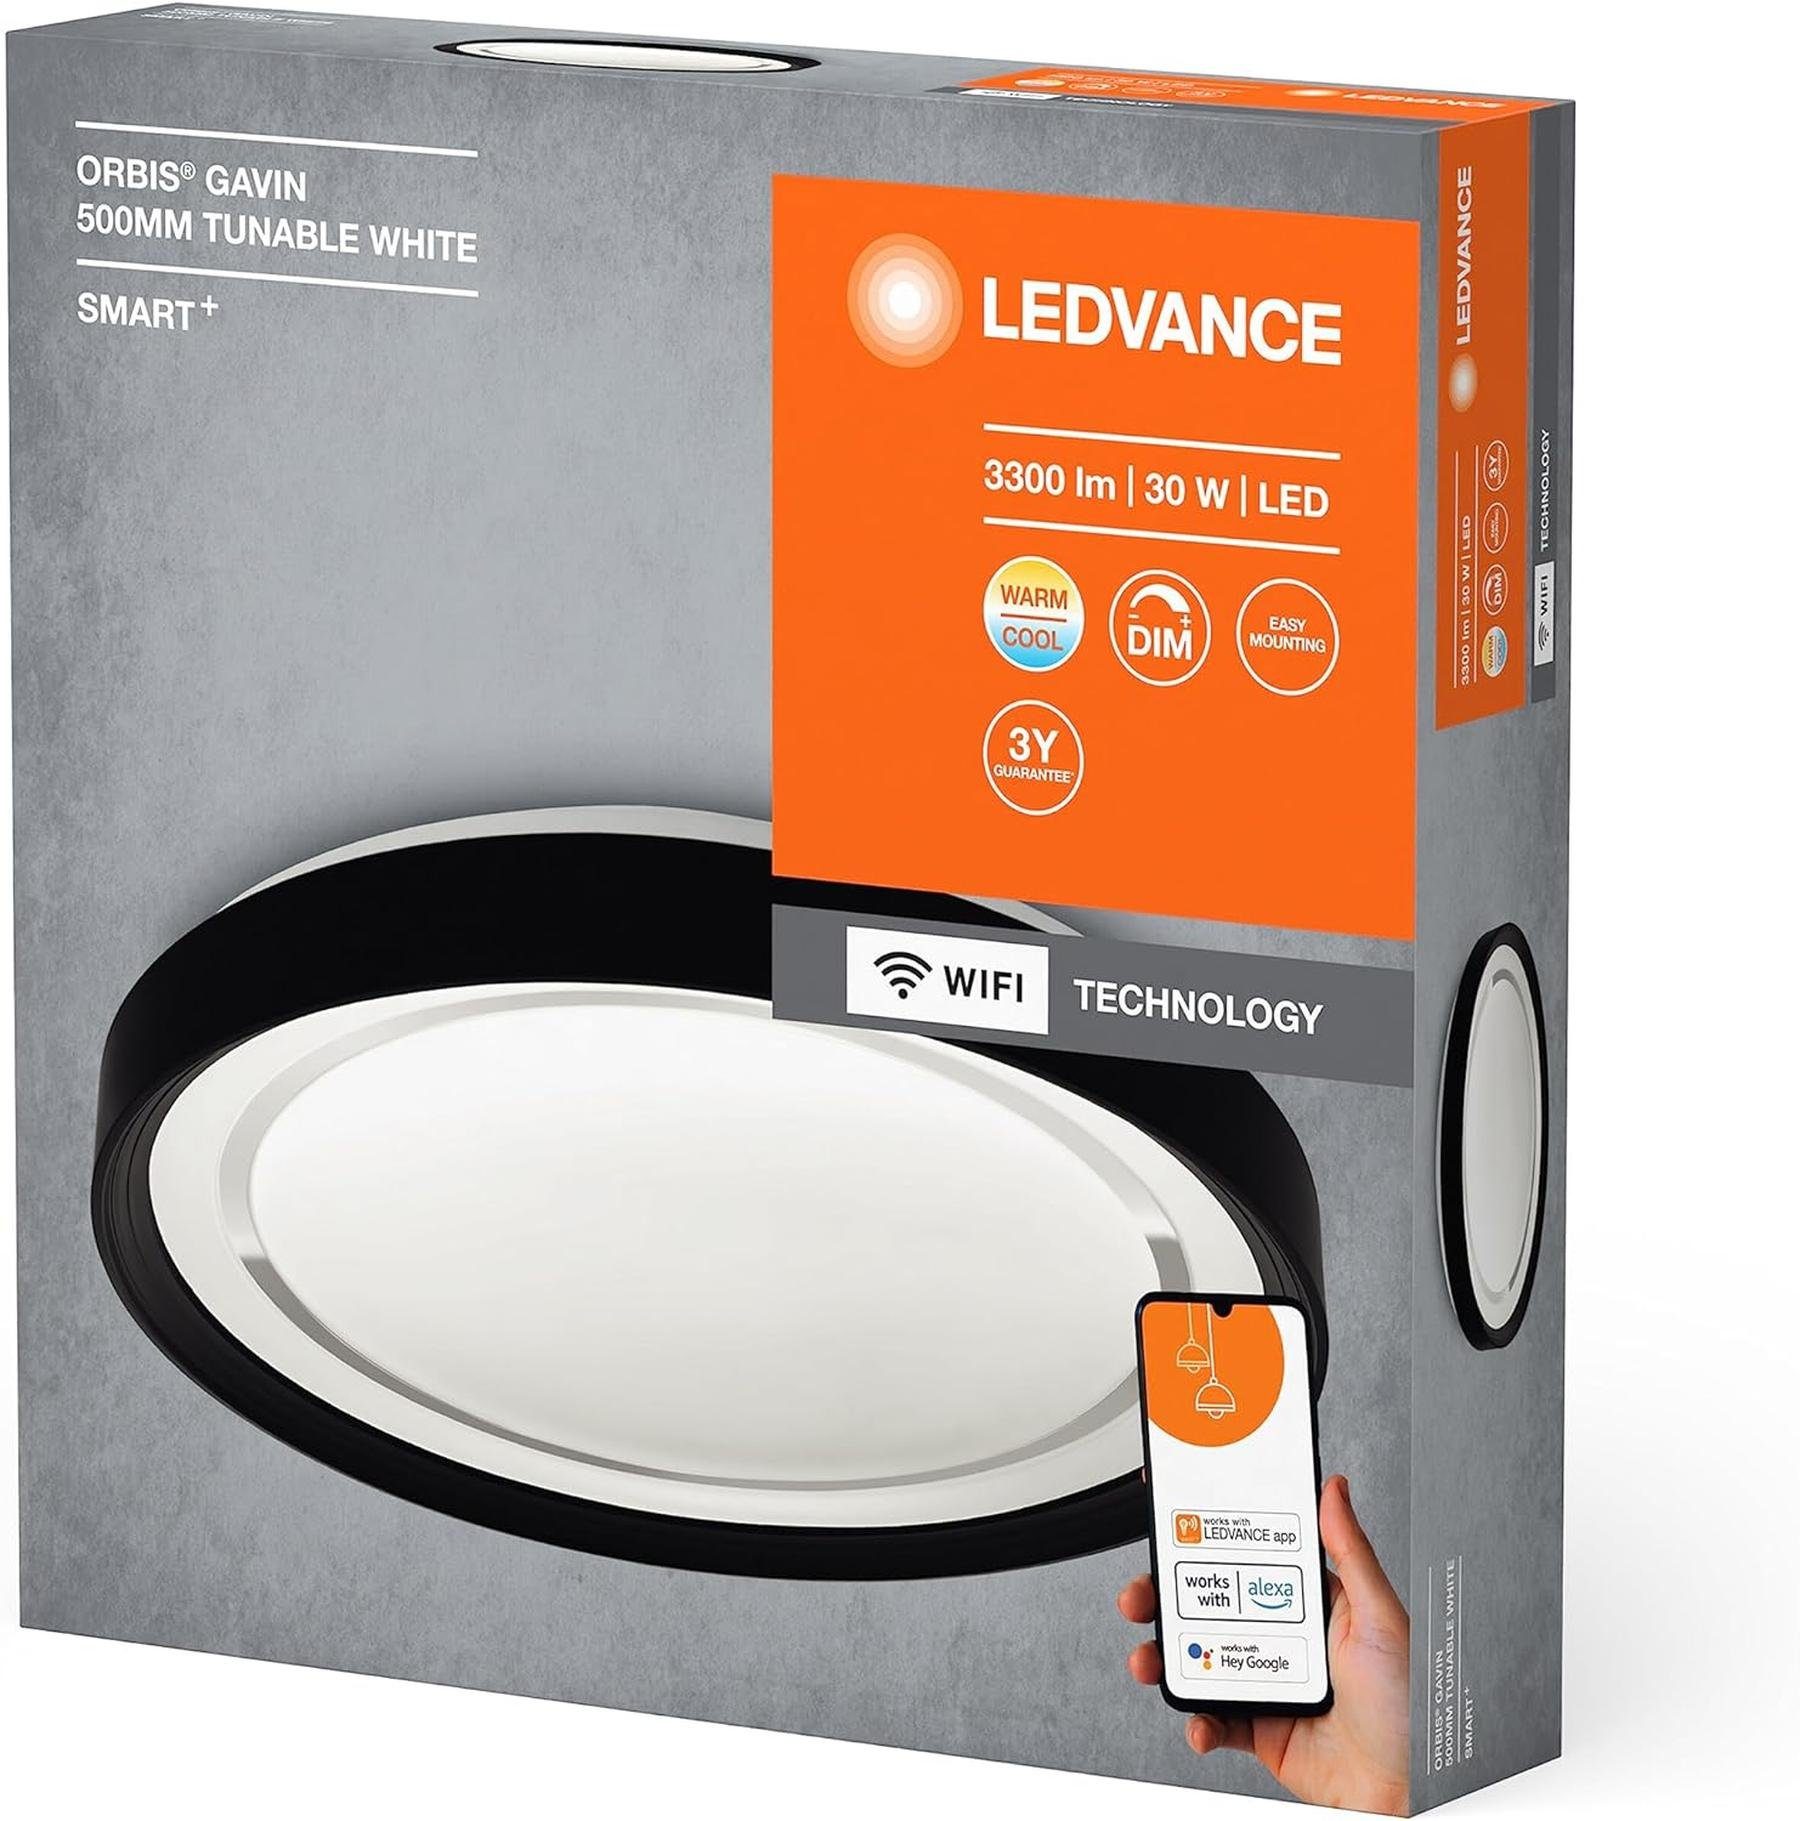 Ledvance Deckenleuchte Dimmbar fest WiFi, Warmweiß, Smart+ integriert, Ledvance Gavin Orbis LED